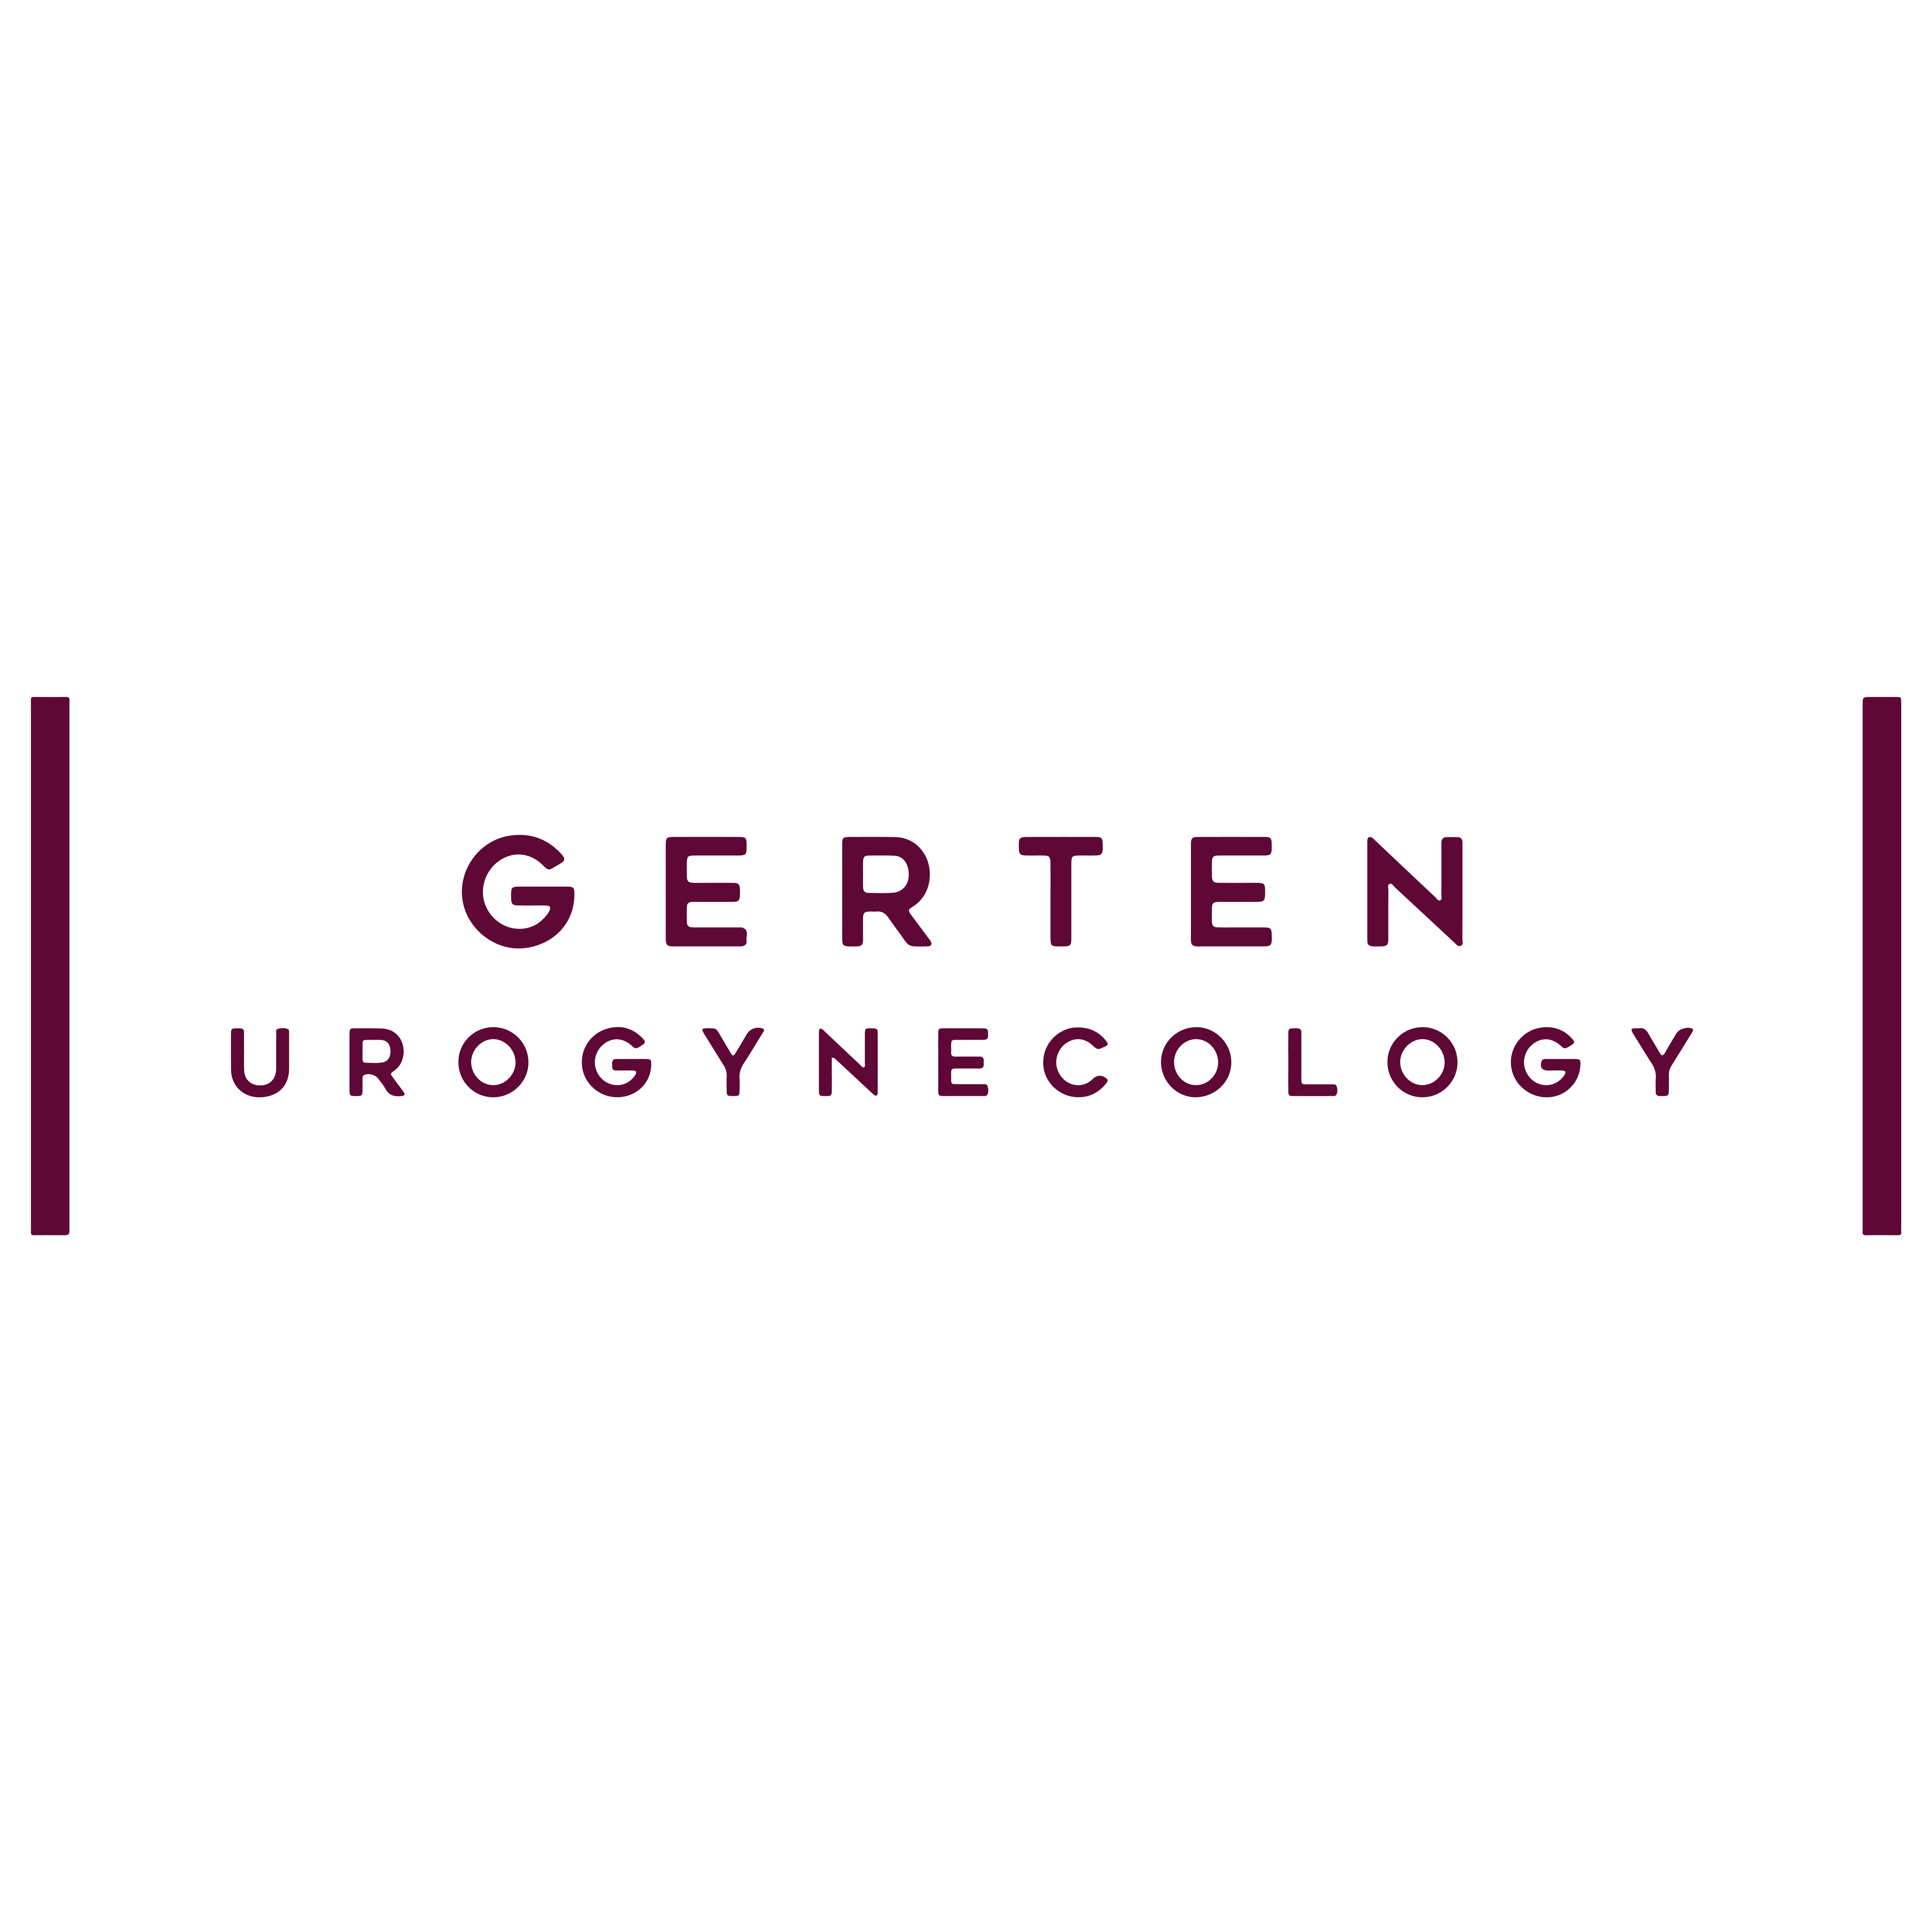 Gerten Urogynecology